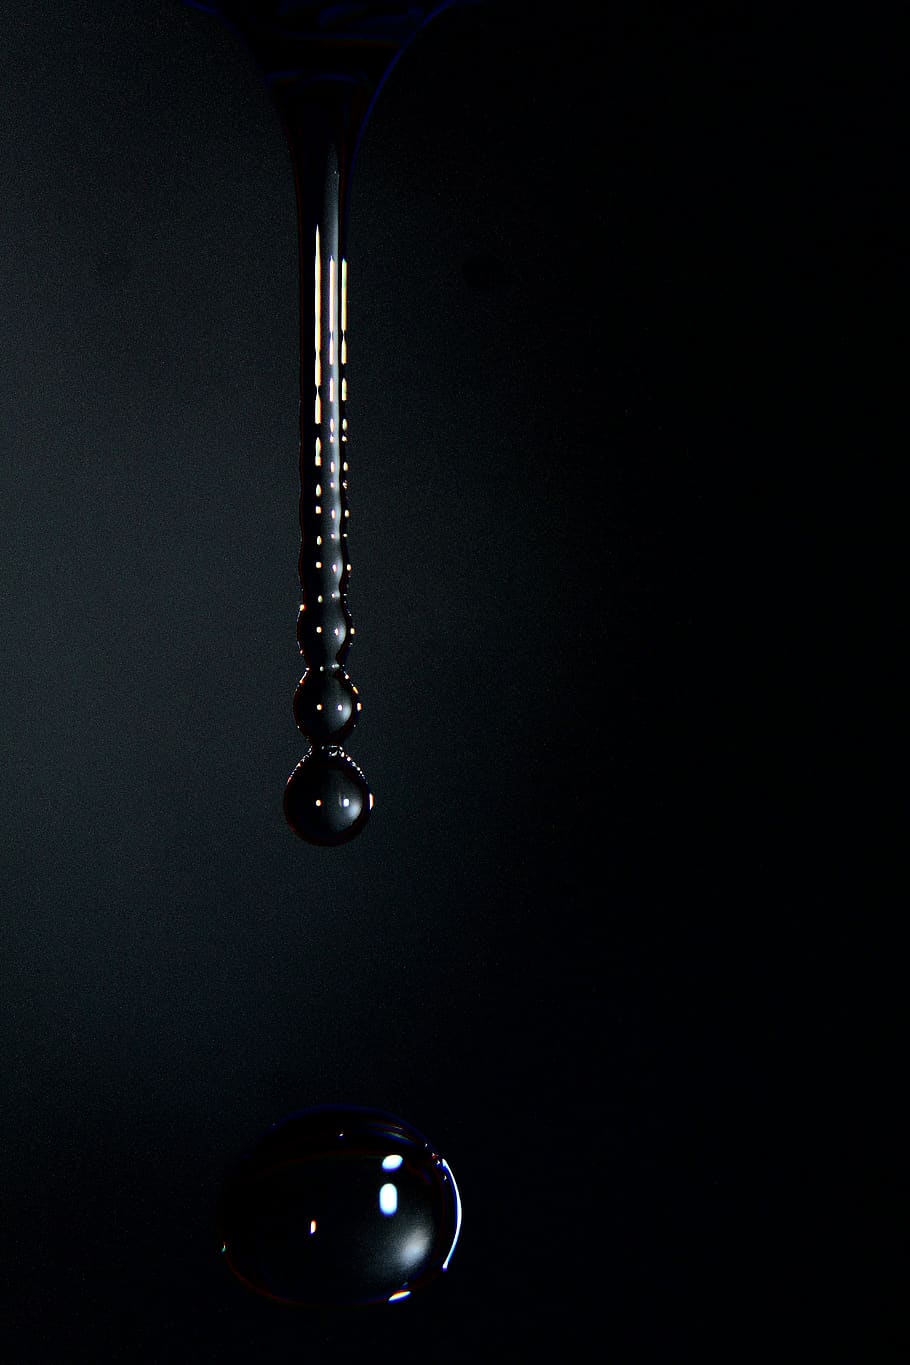 water droplets, wet, liquid, raindrops, fluid, flow, black background